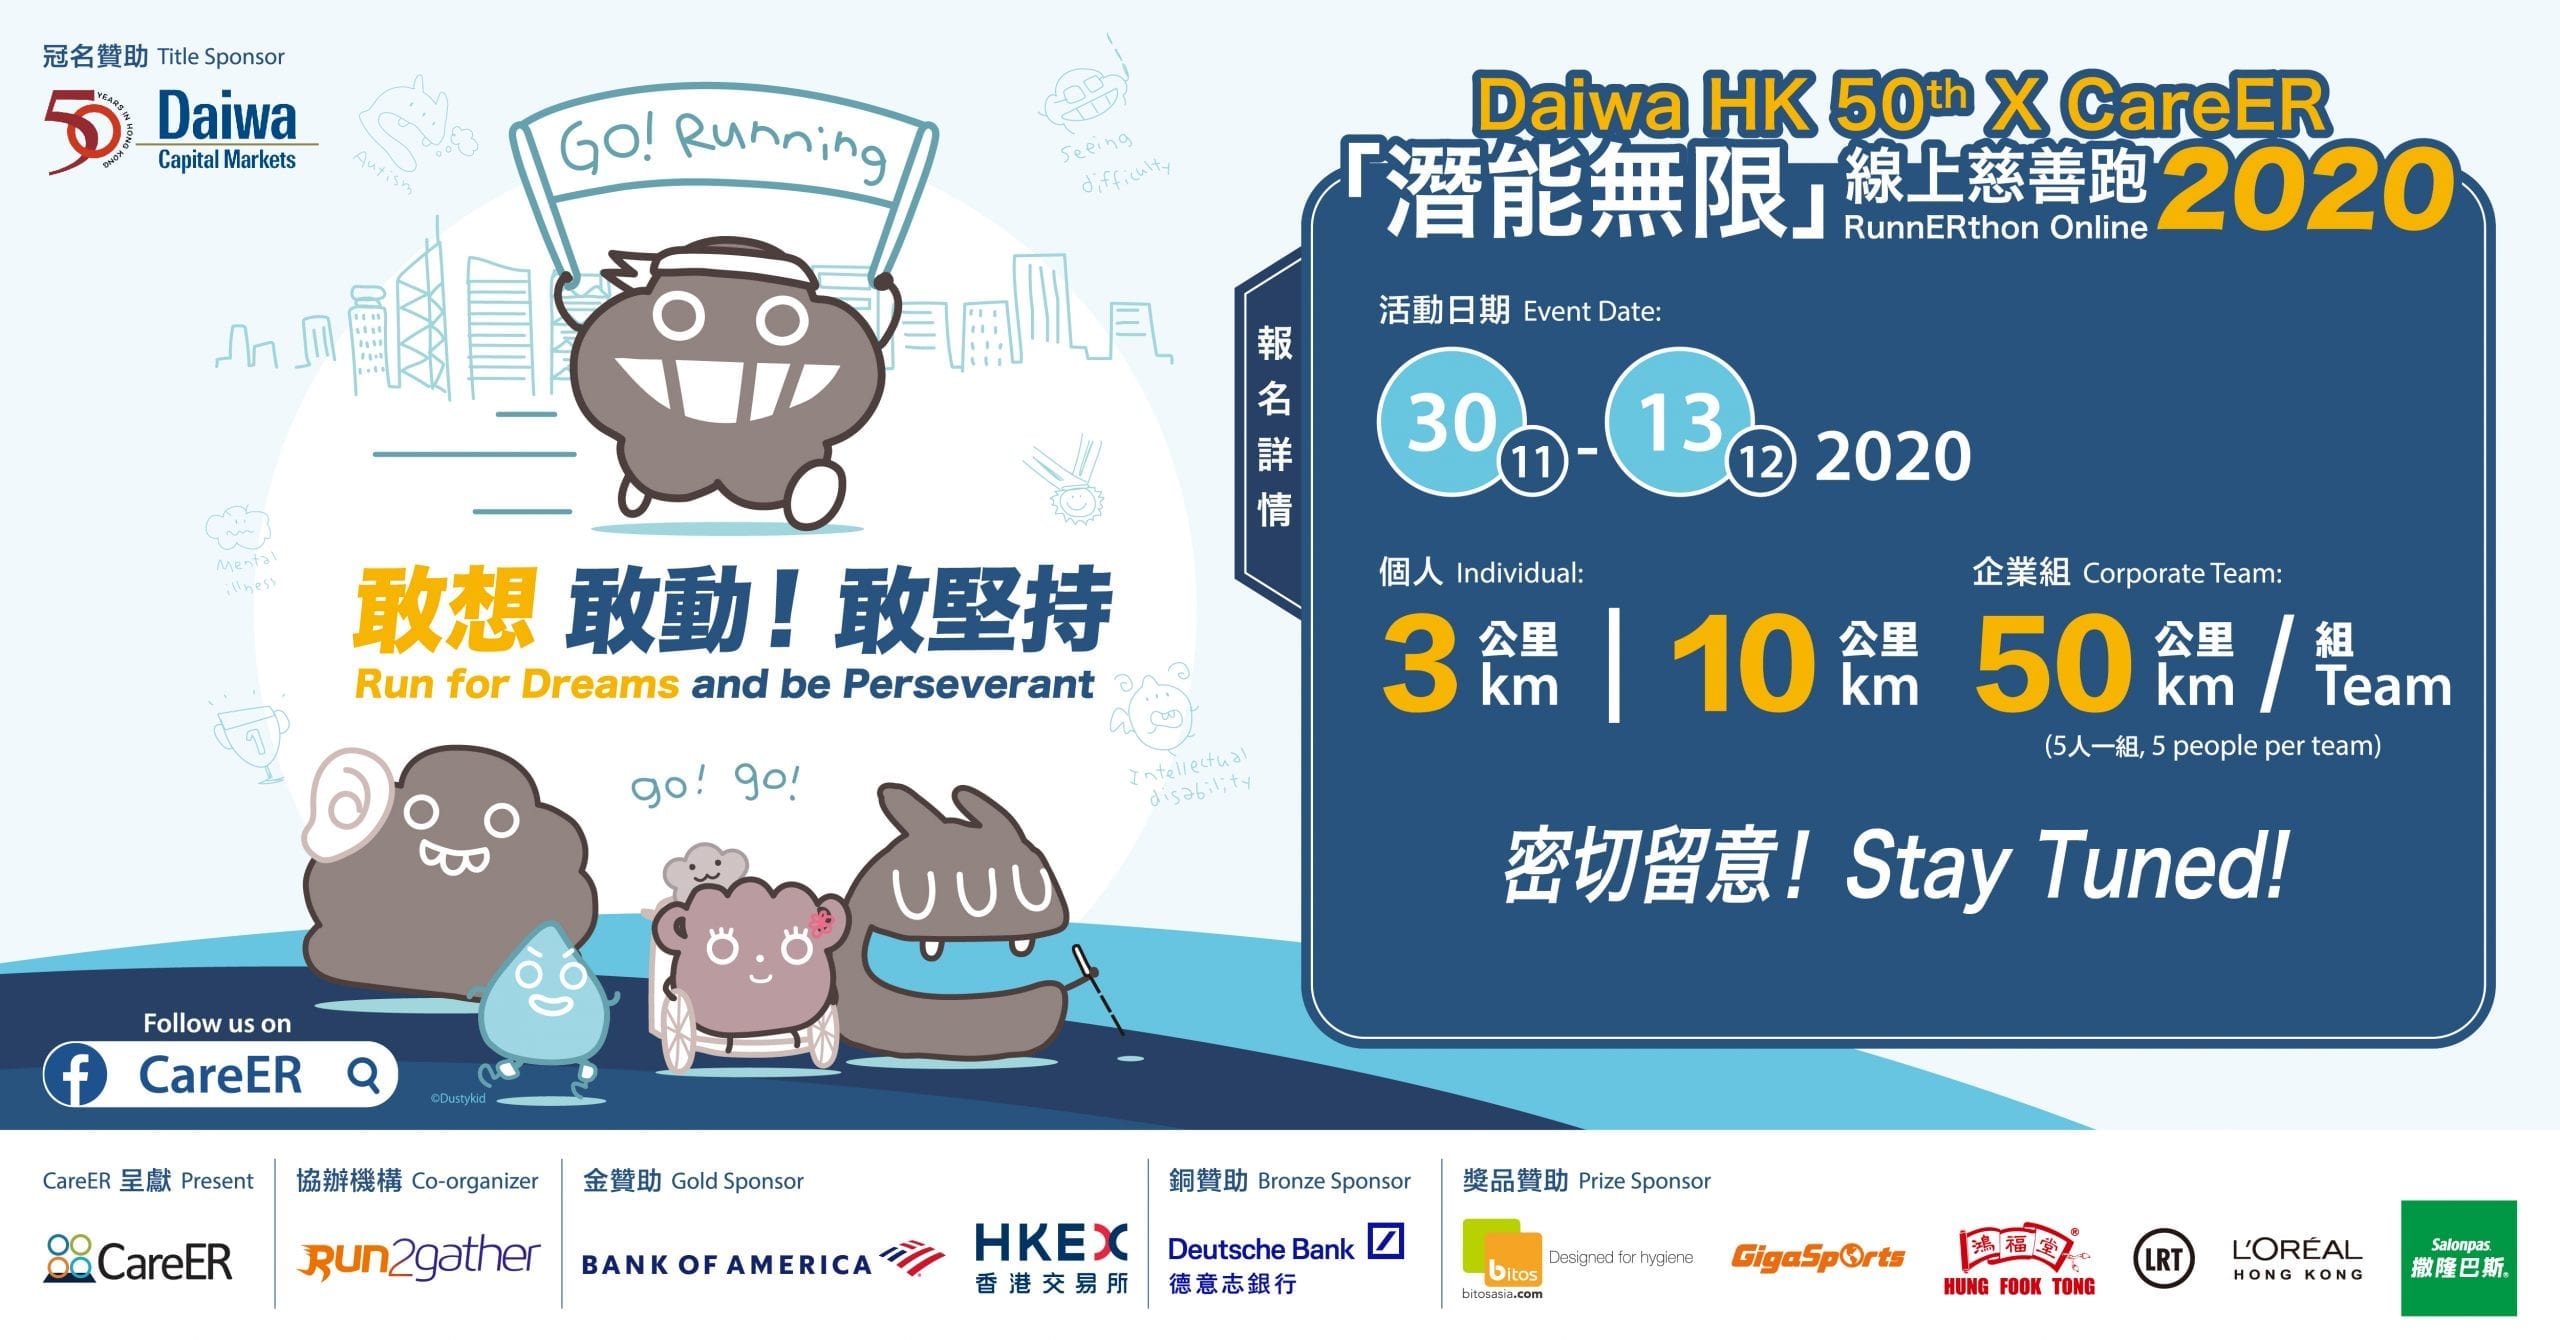 大和香港50th X CareER潛能無限線上慈善跑2020 Daiwa HK 50th X CareER RunnERthon Online 2020